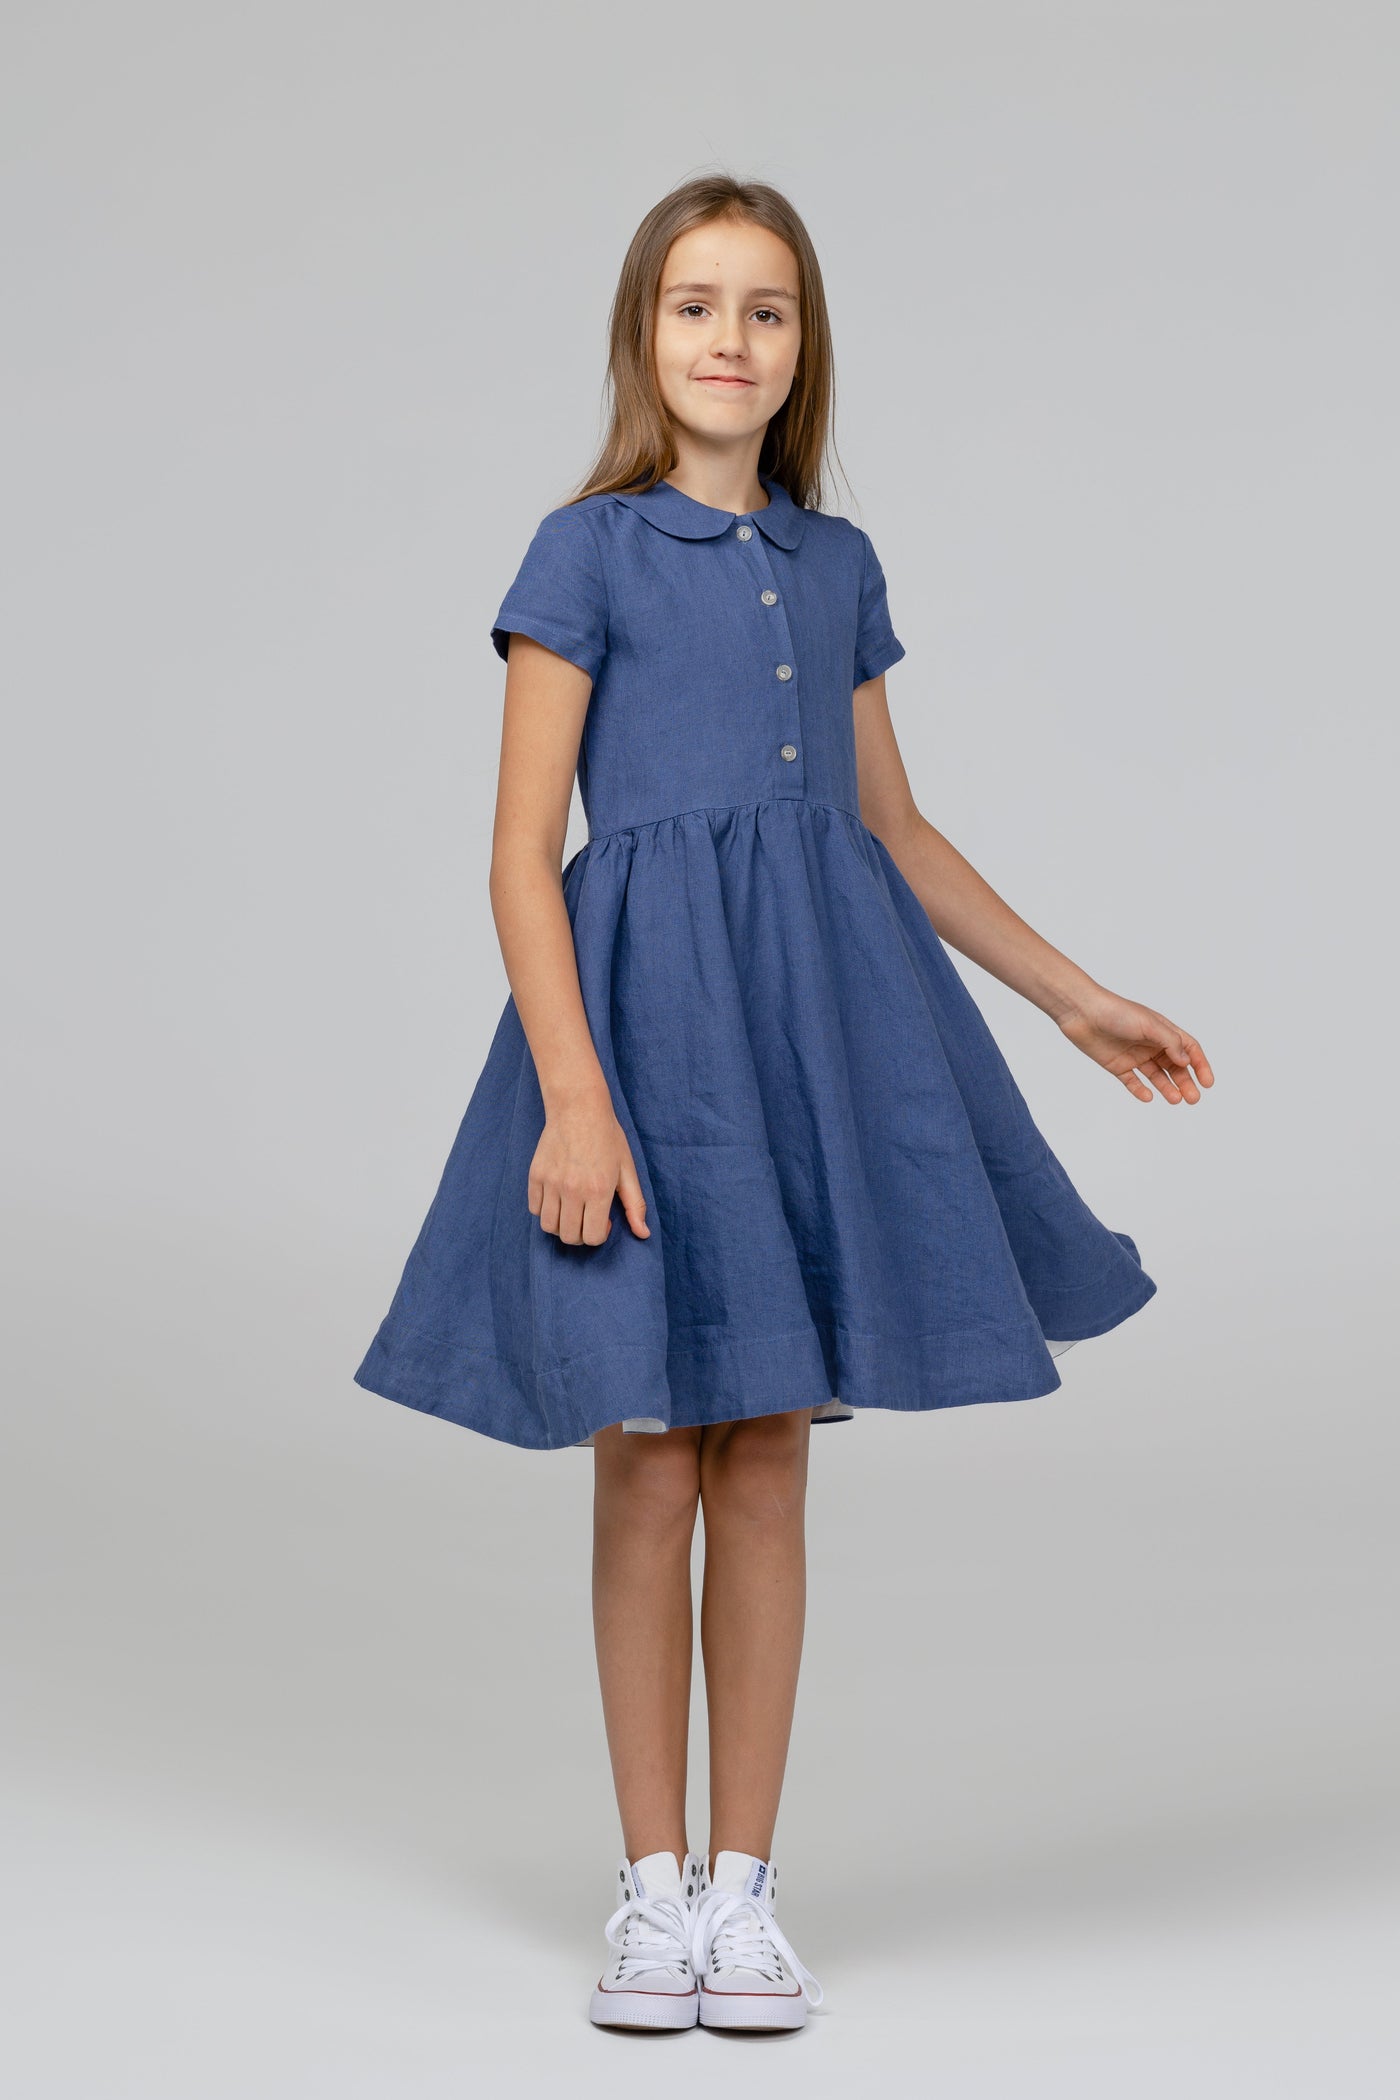 Mini Me Classic Dress, Short Sleeve, Moonlight Blue